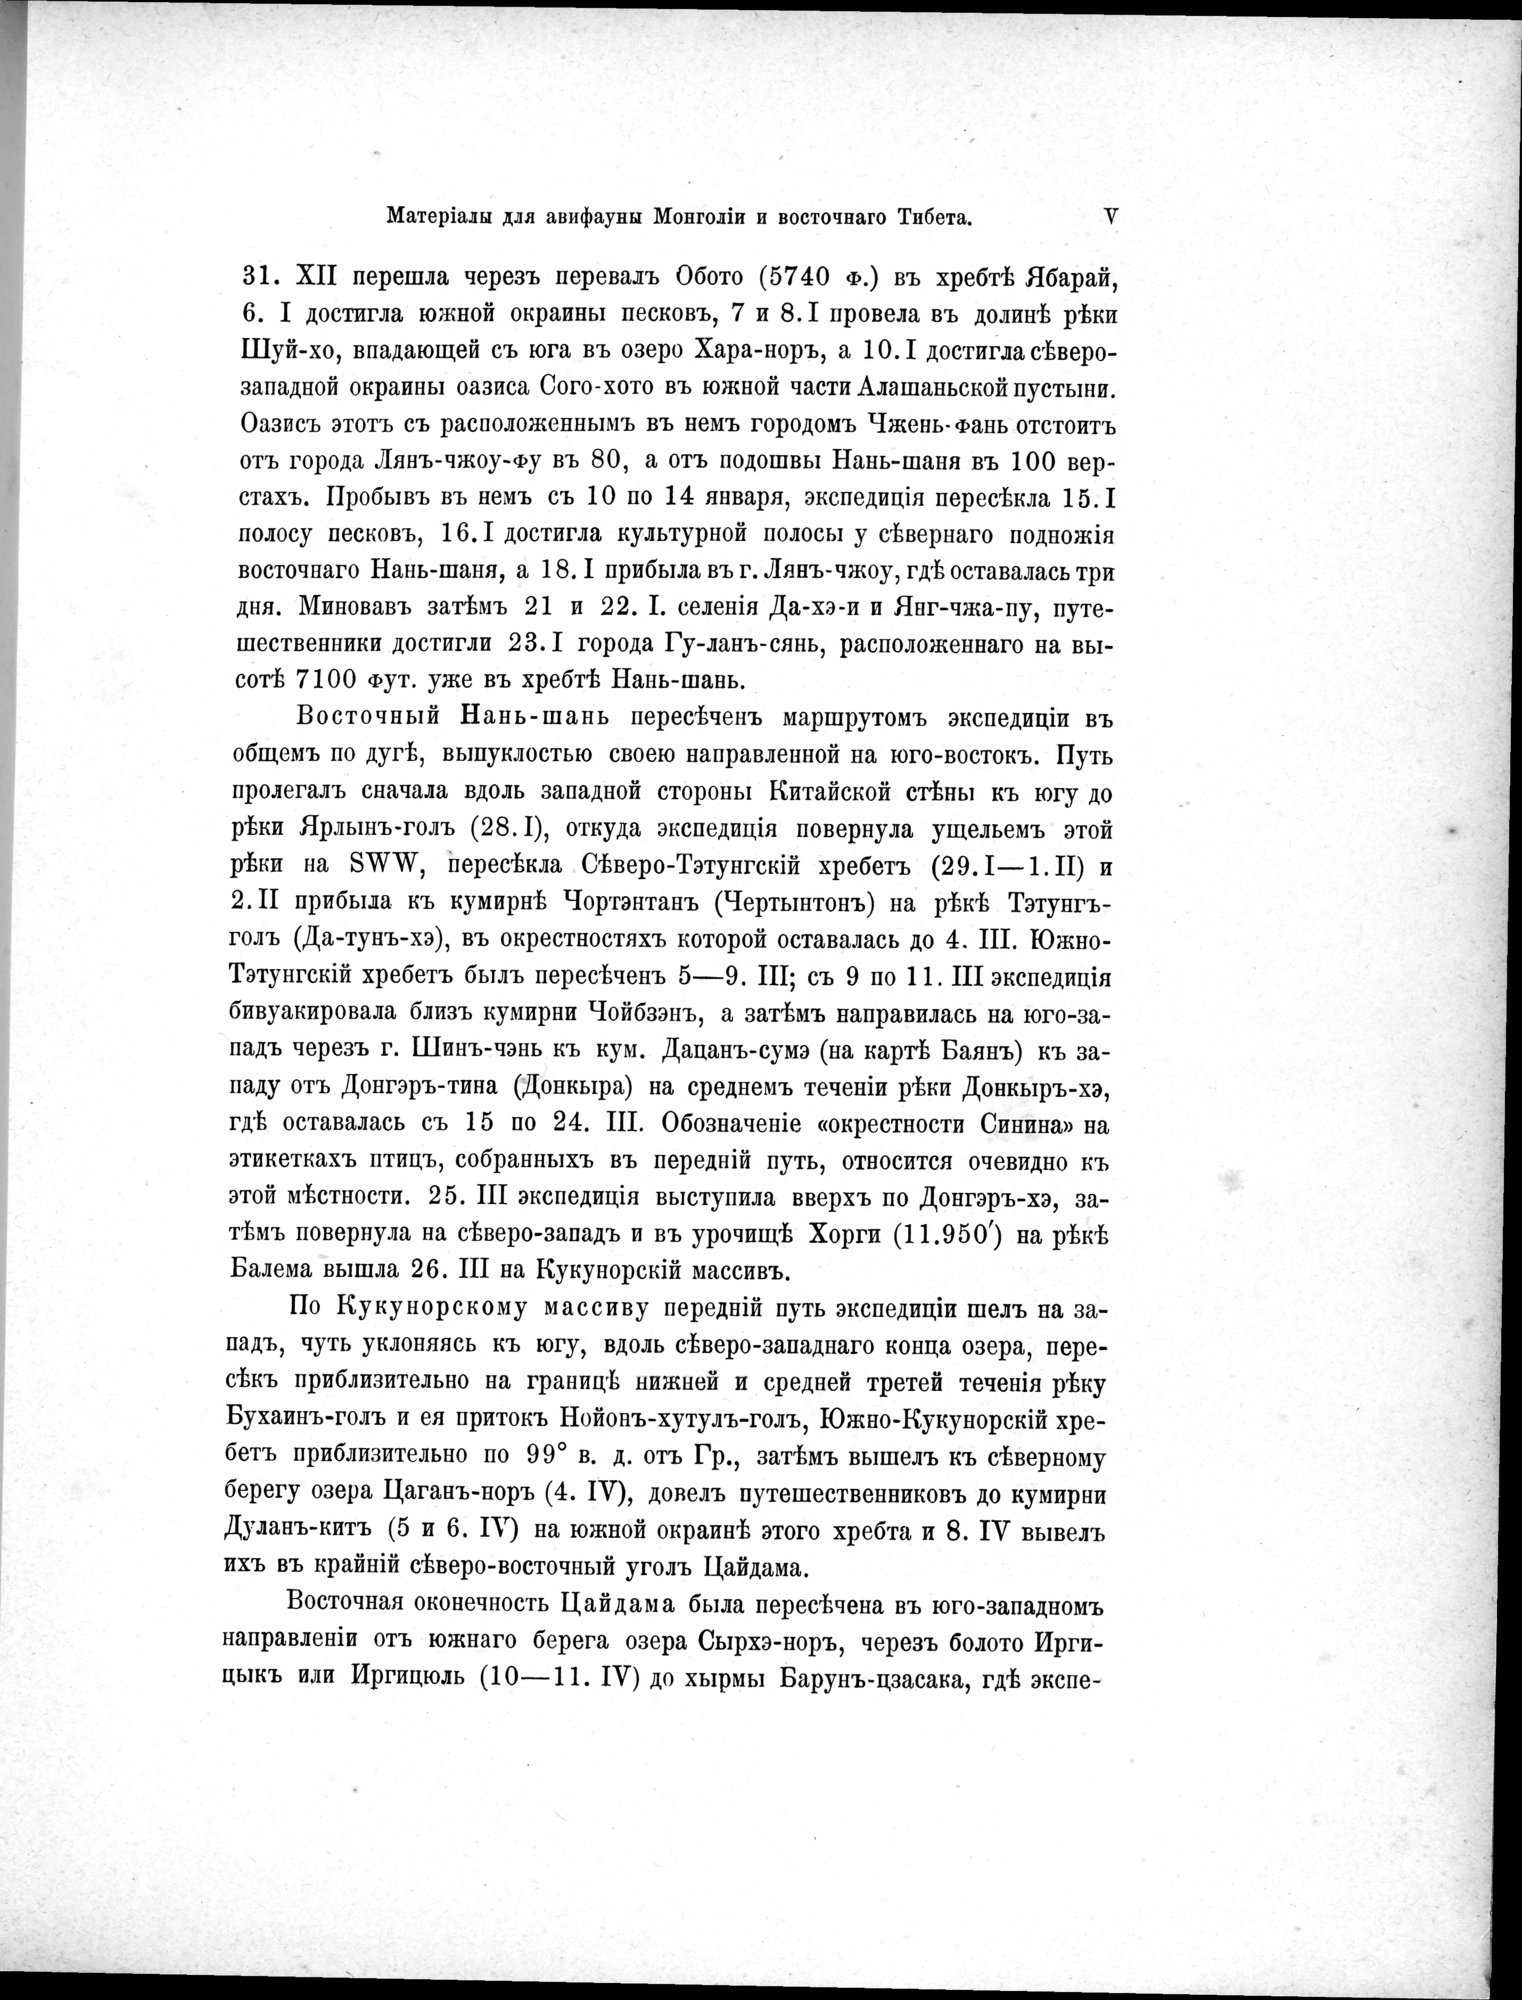 Mongoliia i Kam : vol.5 / Page 19 (Grayscale High Resolution Image)